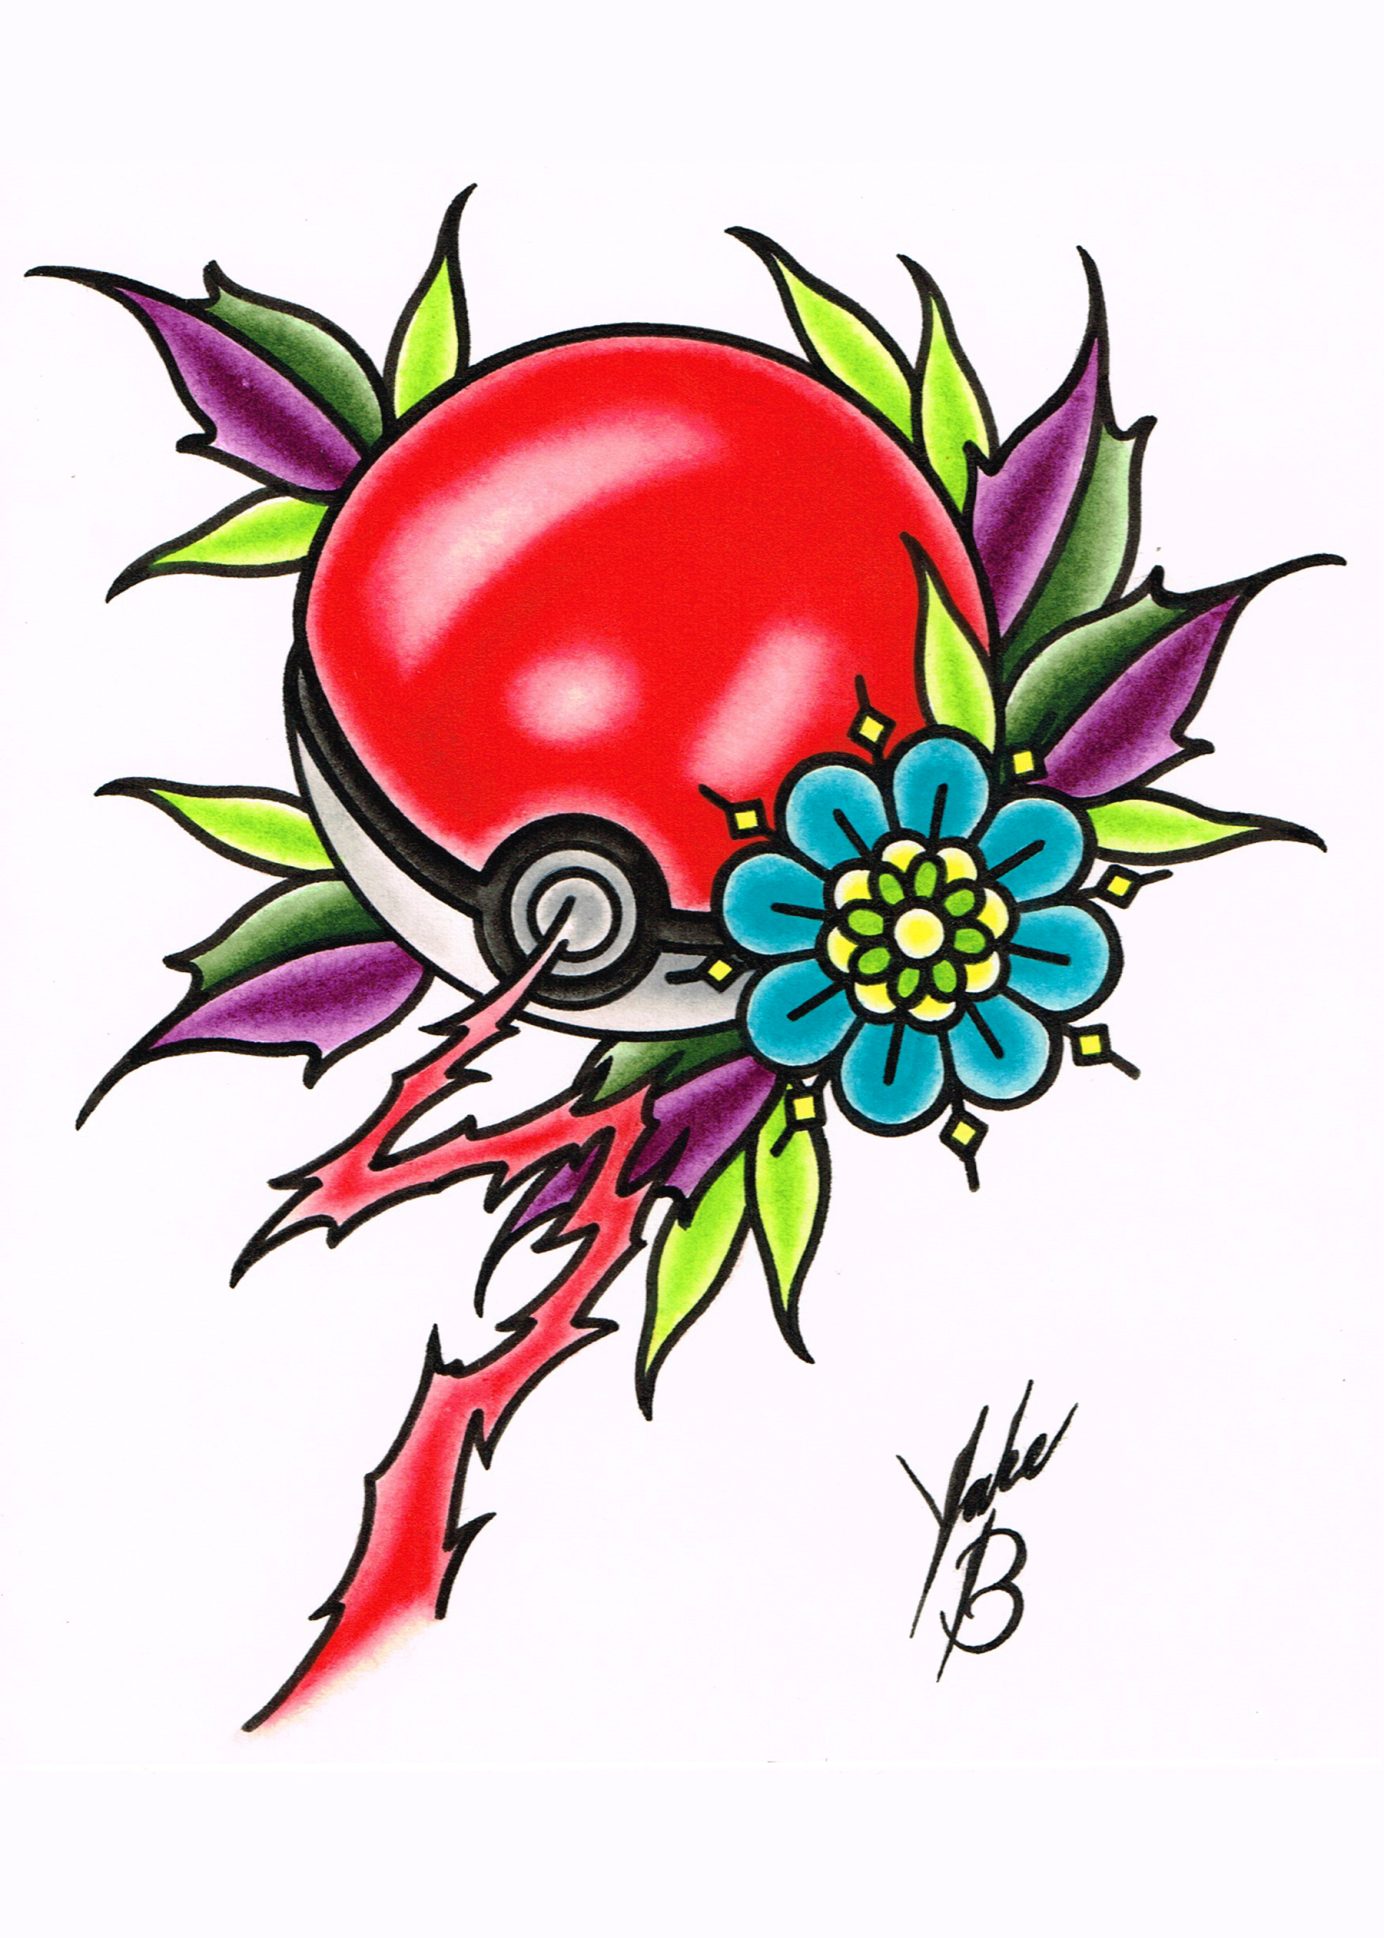 Pokeball Painting by Jake B